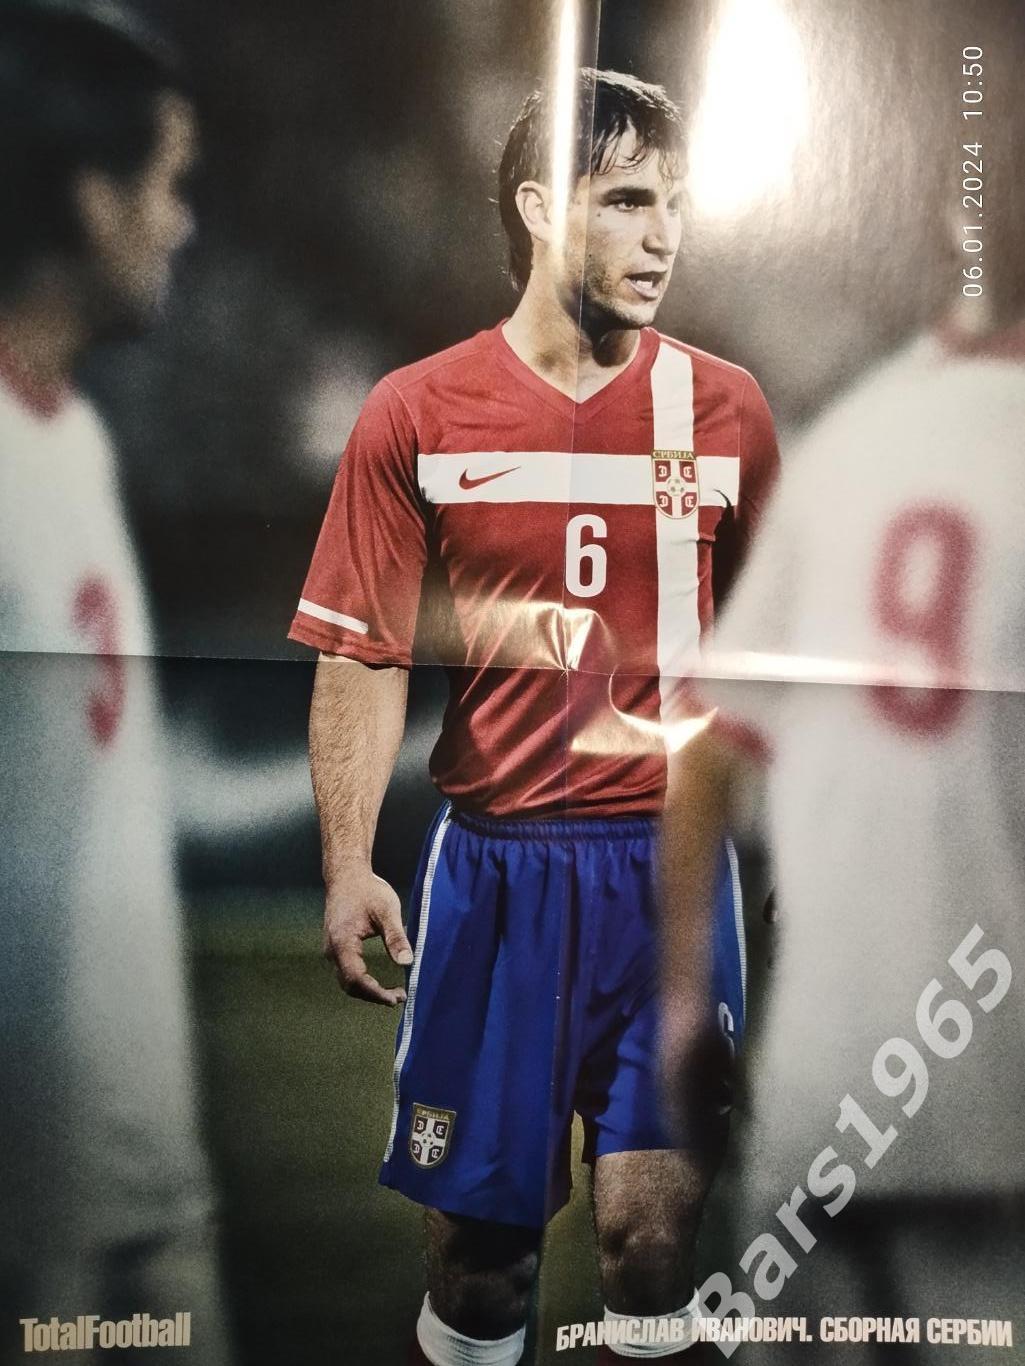 Total Football № 7 (54) 2010 с постером 2